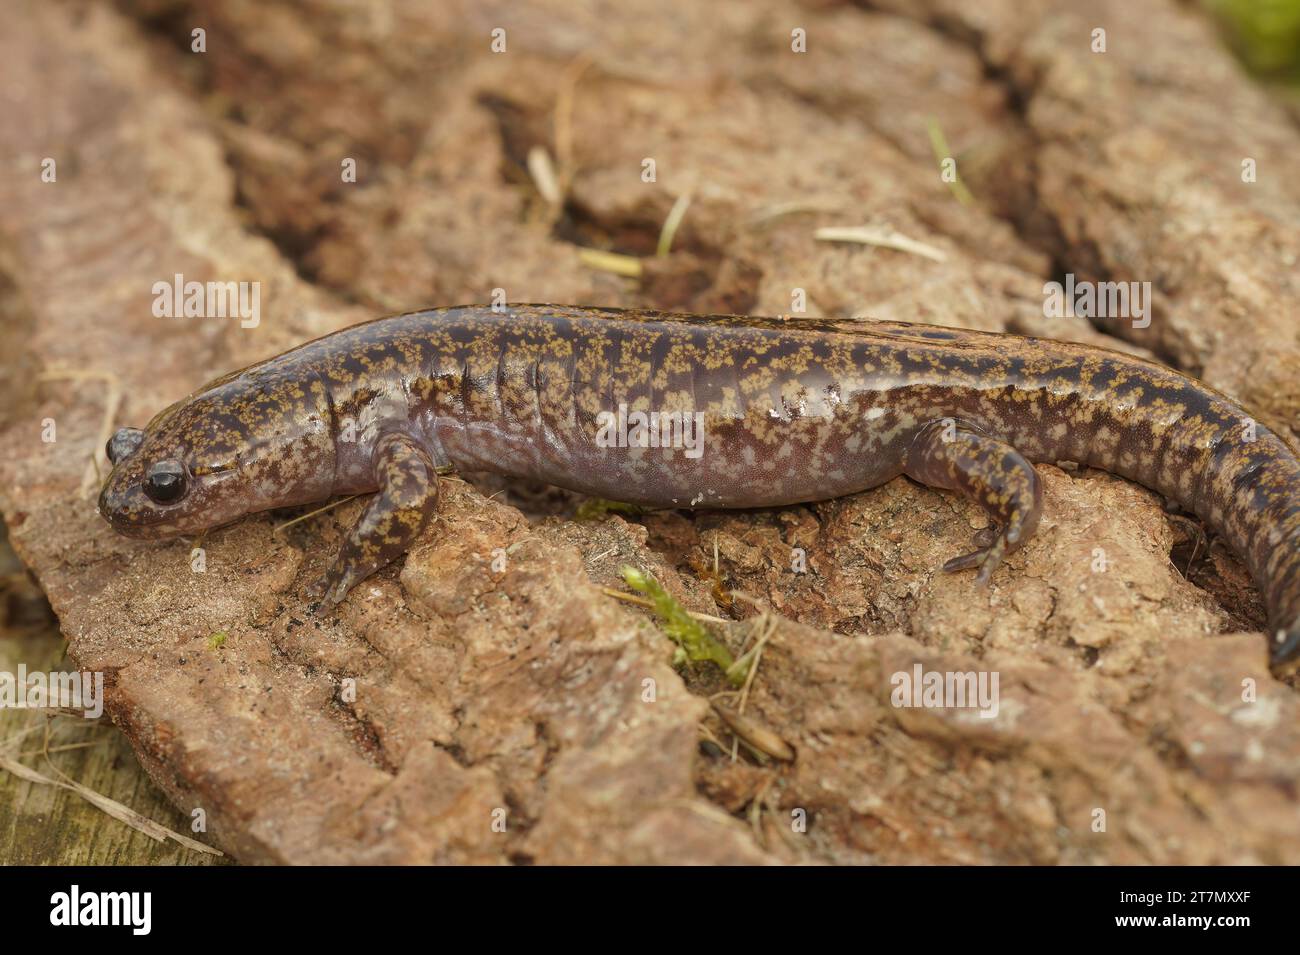 Close up of a Japanese endemic streamside Hida salamander, Hynobius kimurae on a piece of wood Stock Photo